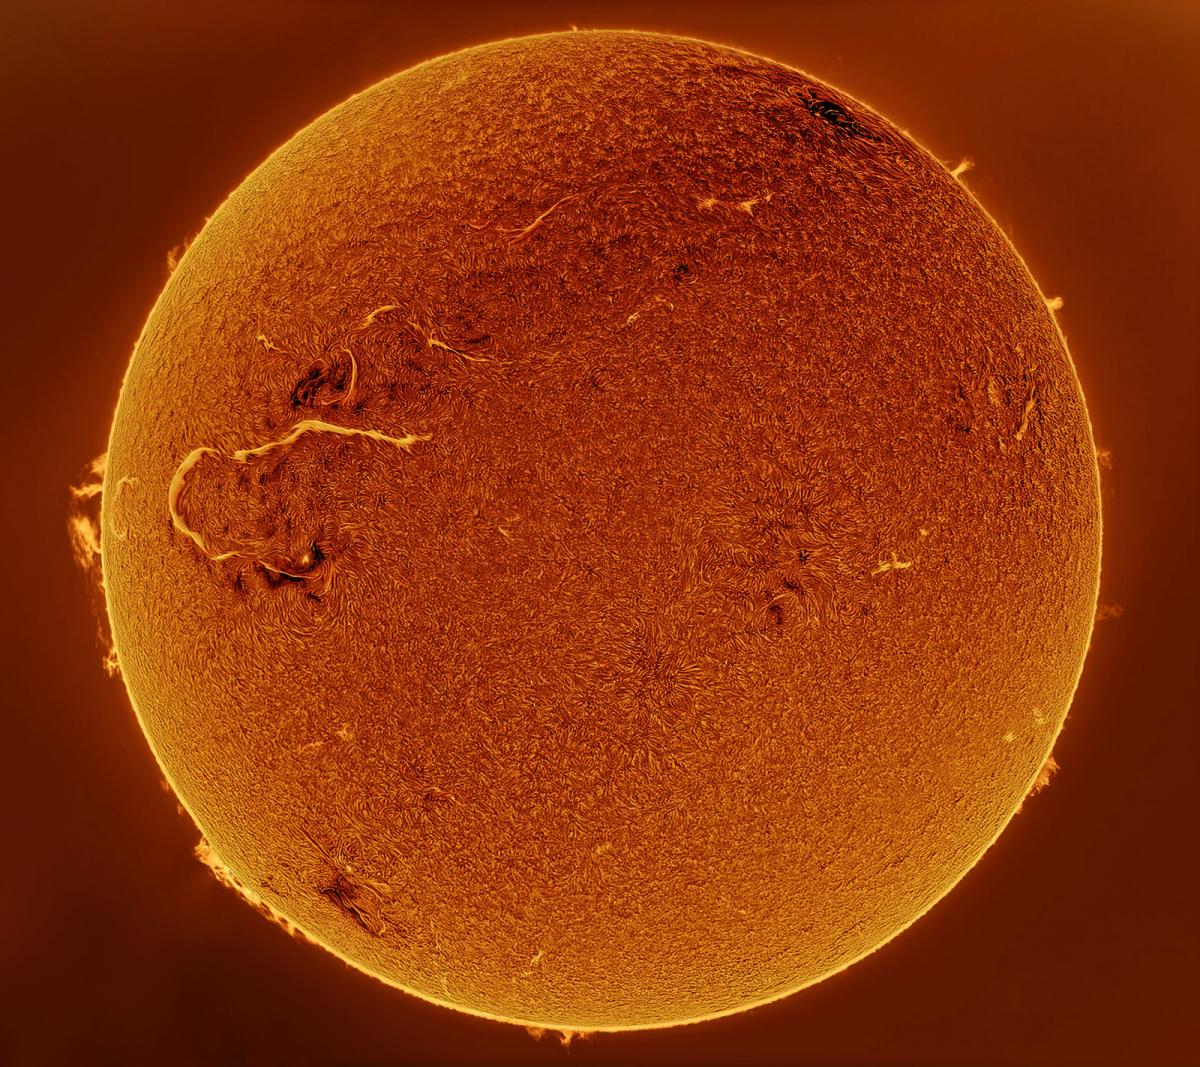 A bright orange sun fill the image. A large solar flare streaks like a scar across the star’s left side